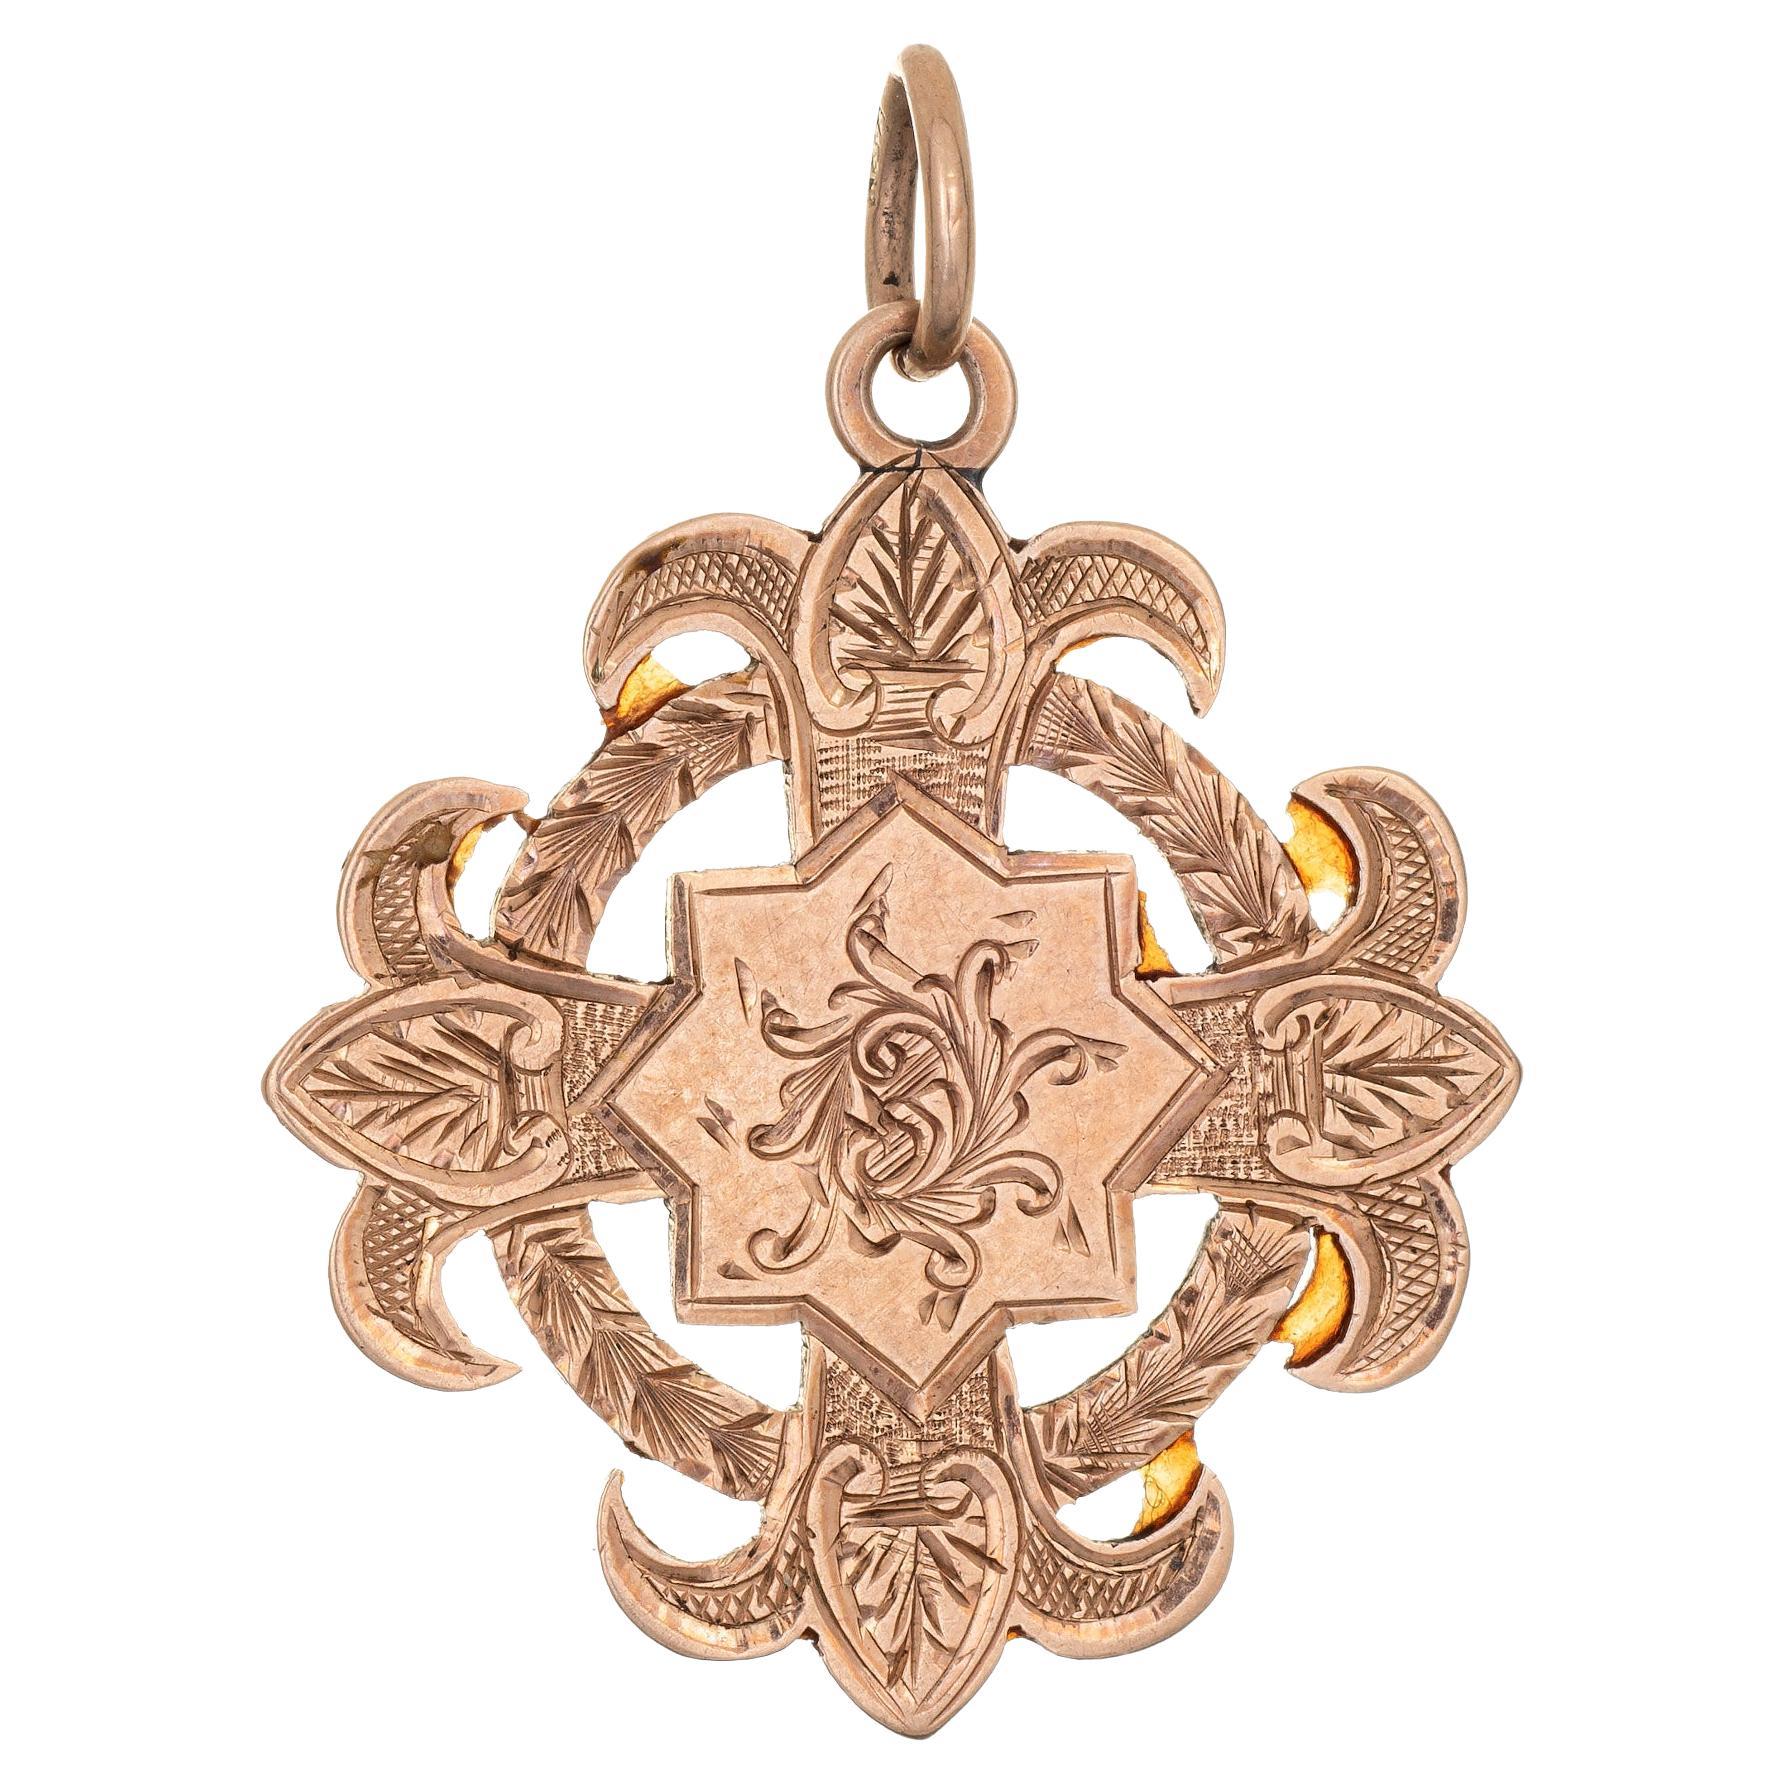 Antique Edwardian Medallion 9k Rose Gold Pendant Vintage Fine Jewelry Fob 1906